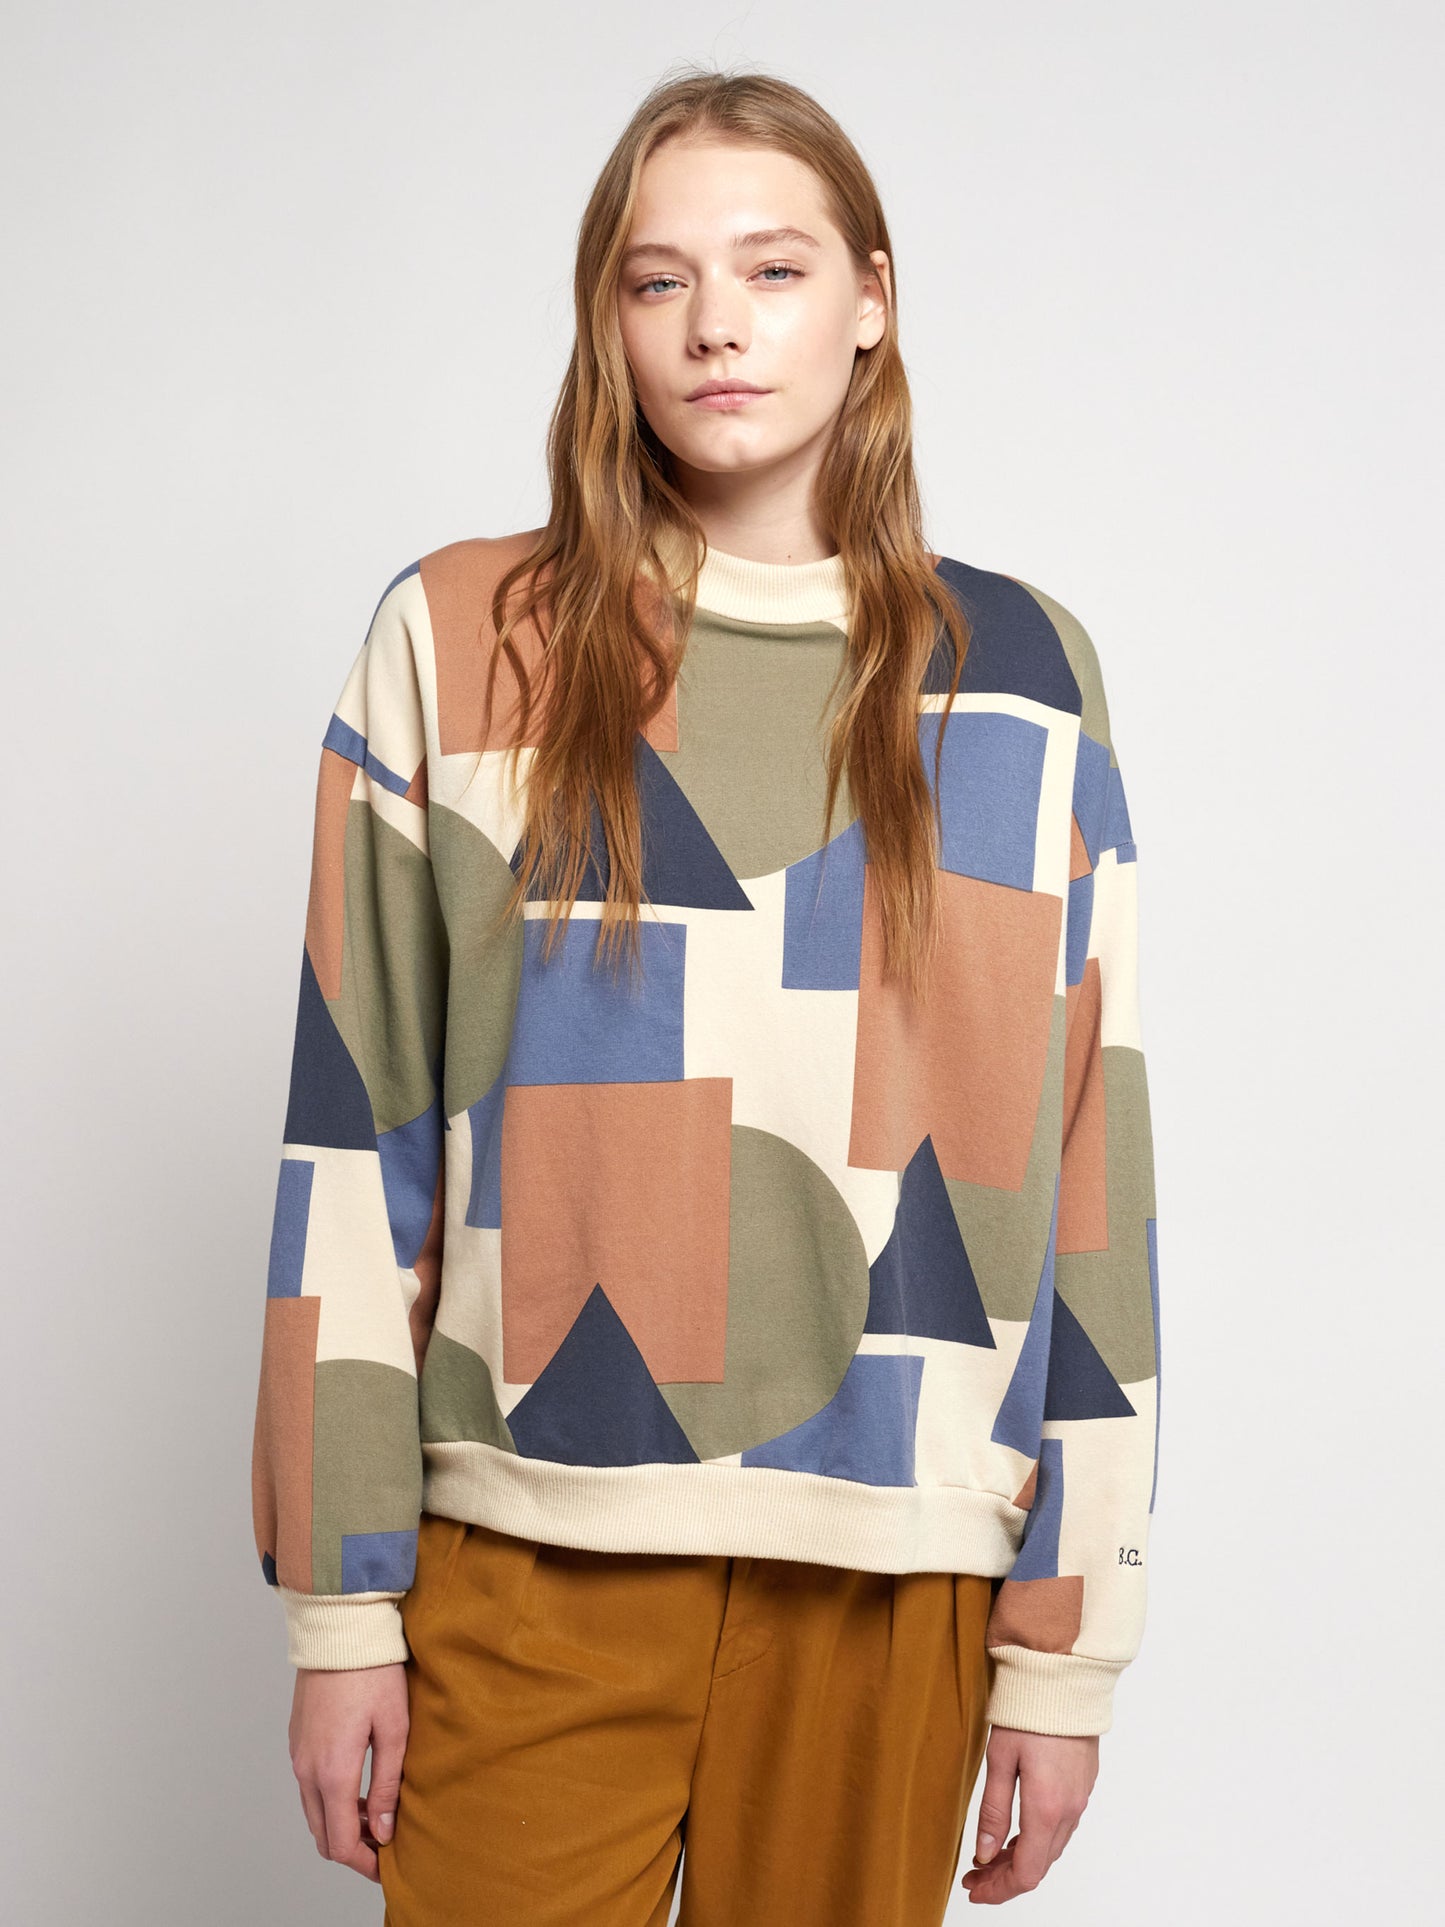 Geometric all over sweatshirt